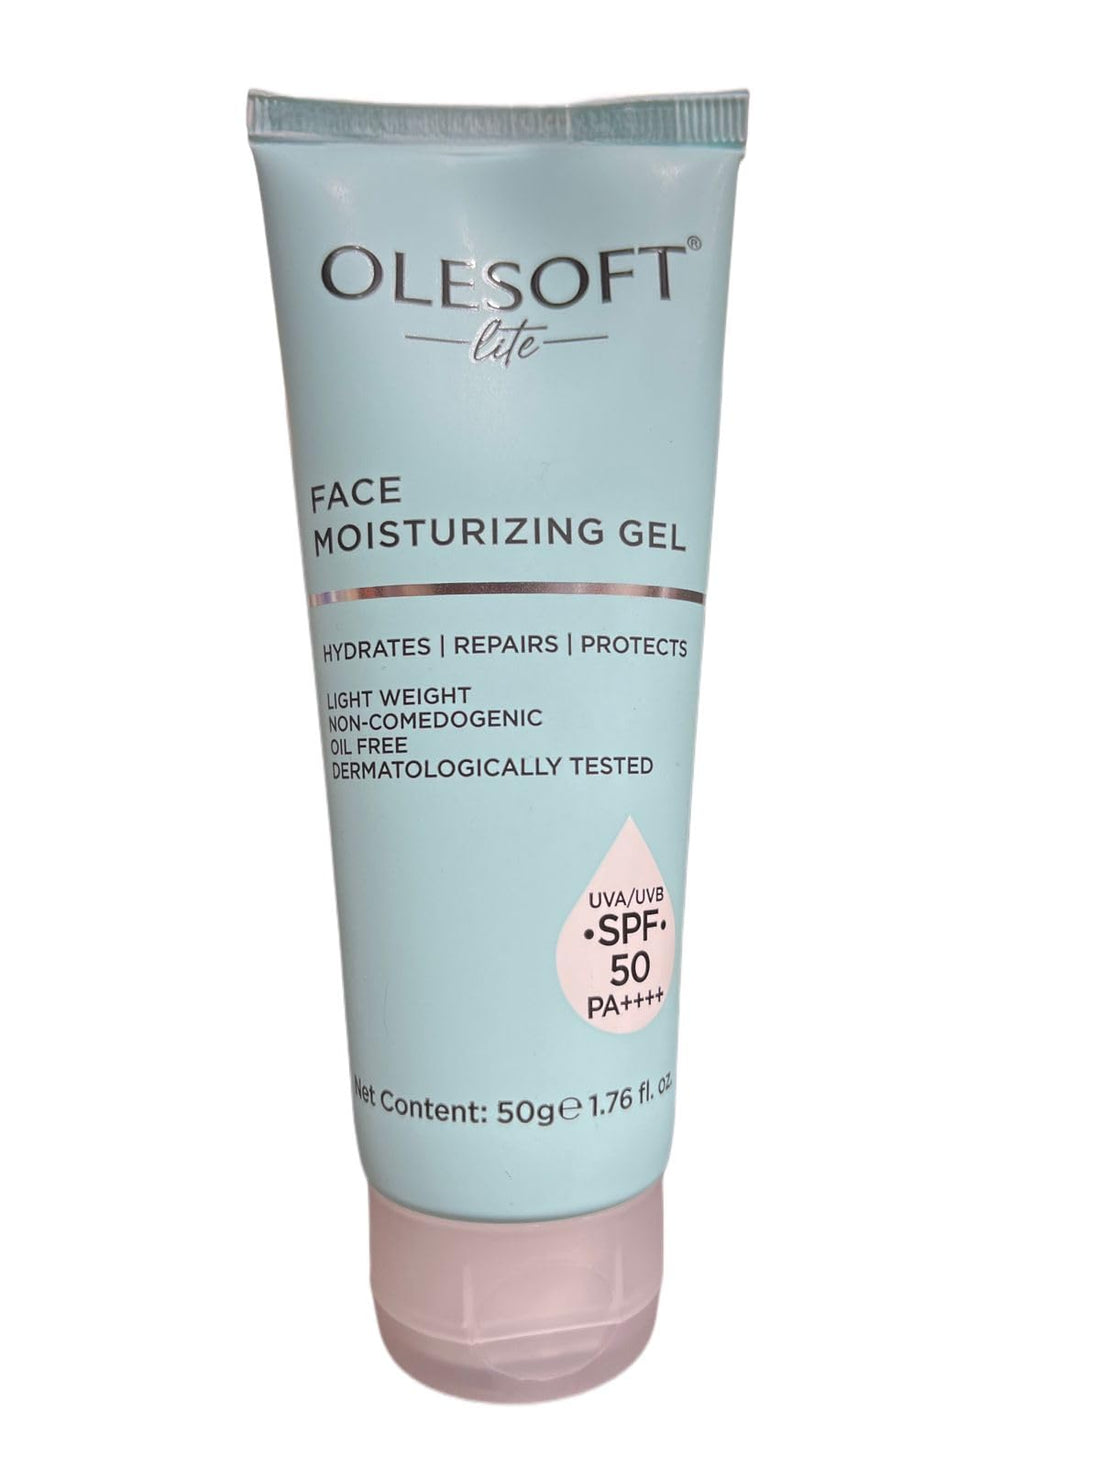 Olesoft Lite Face Moisturizing Gel SPF 50